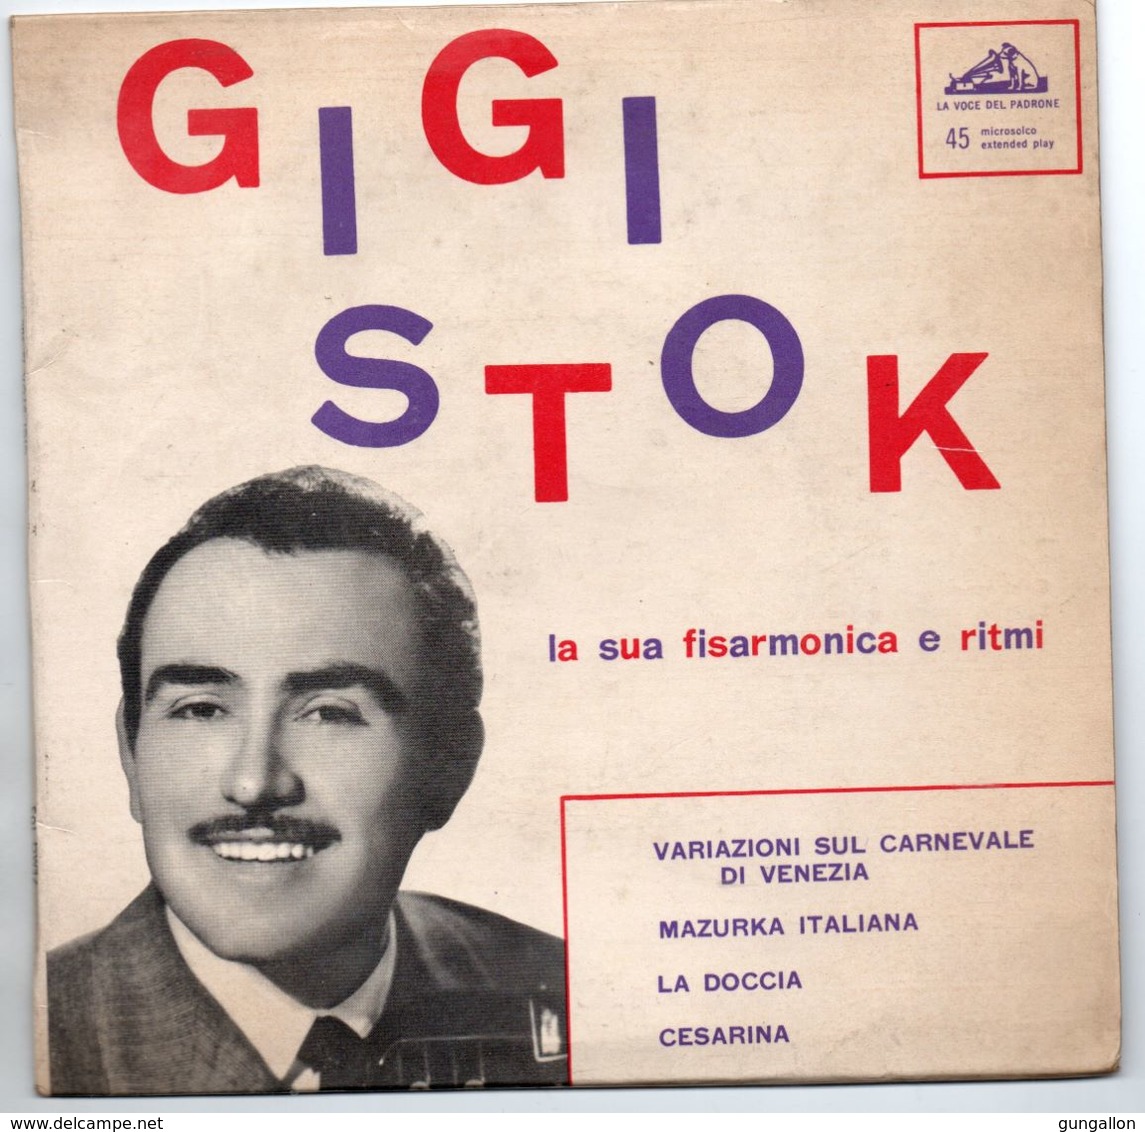 Gigi Stok(1959)  "Mazurka Italiana  -  La Doccia  -  Cesarina" - Instrumentaal